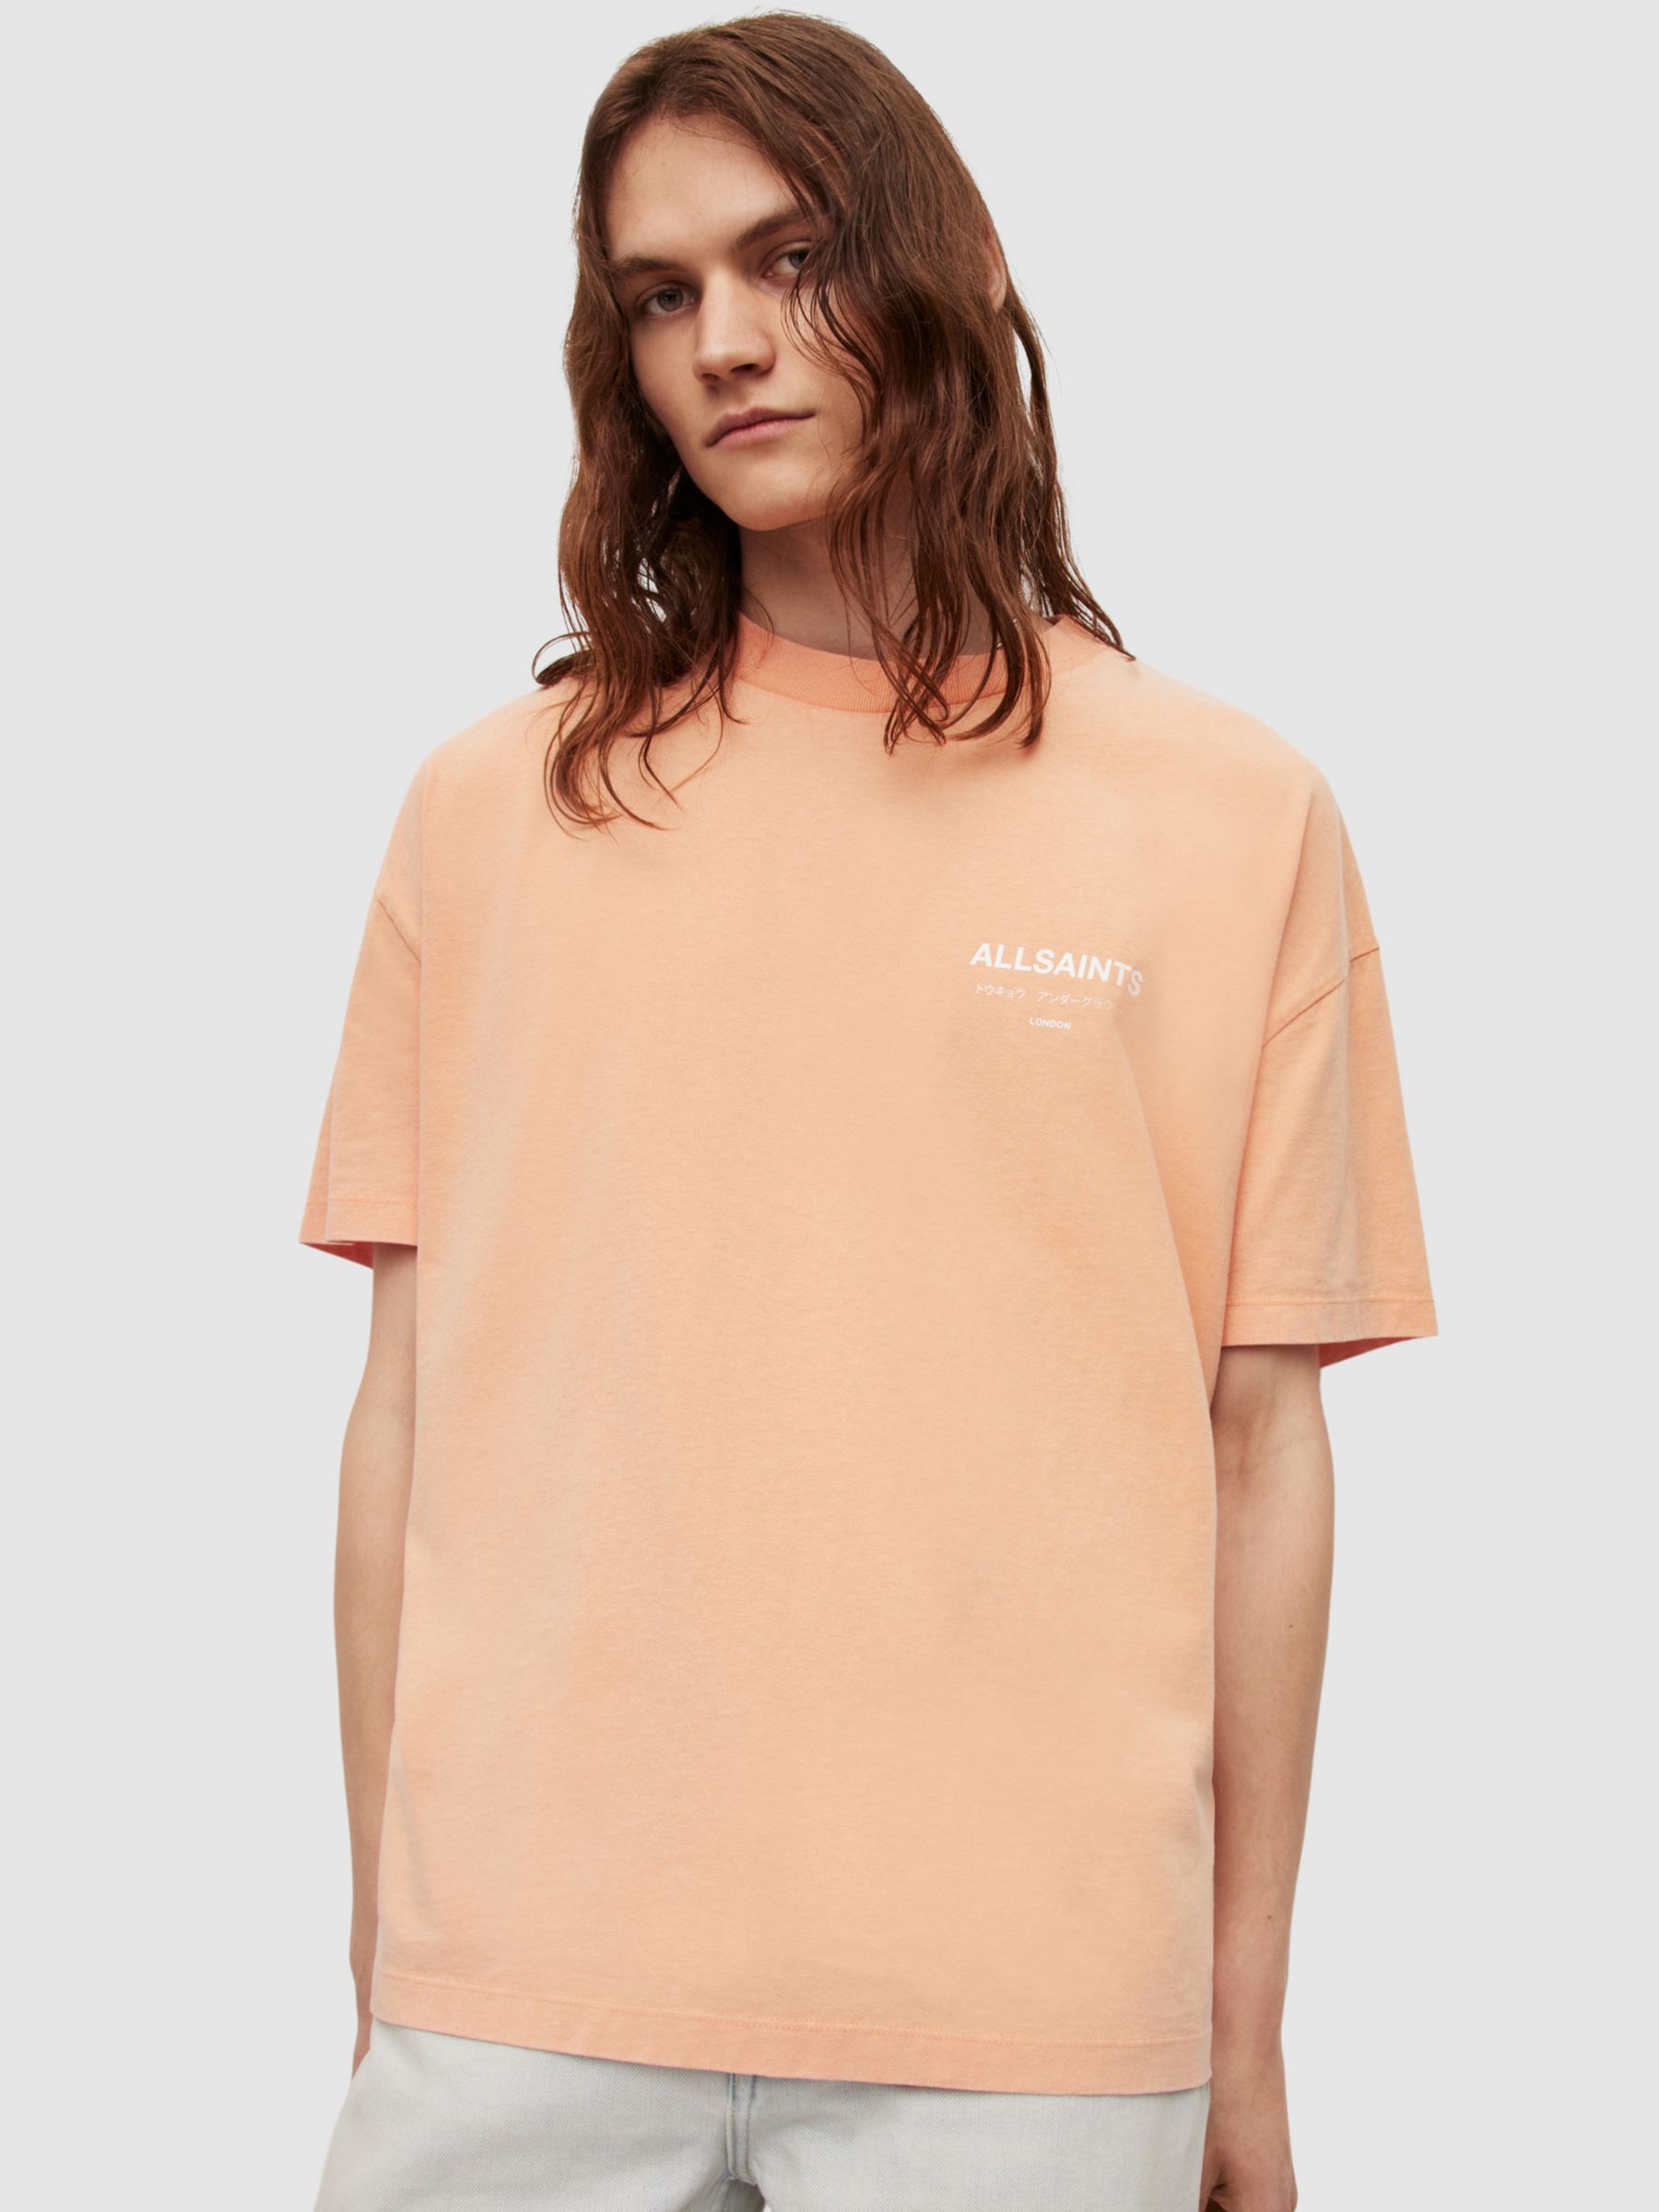 AllSaints Underground T-Shirt, Orange/Cala White at John Lewis & Partners